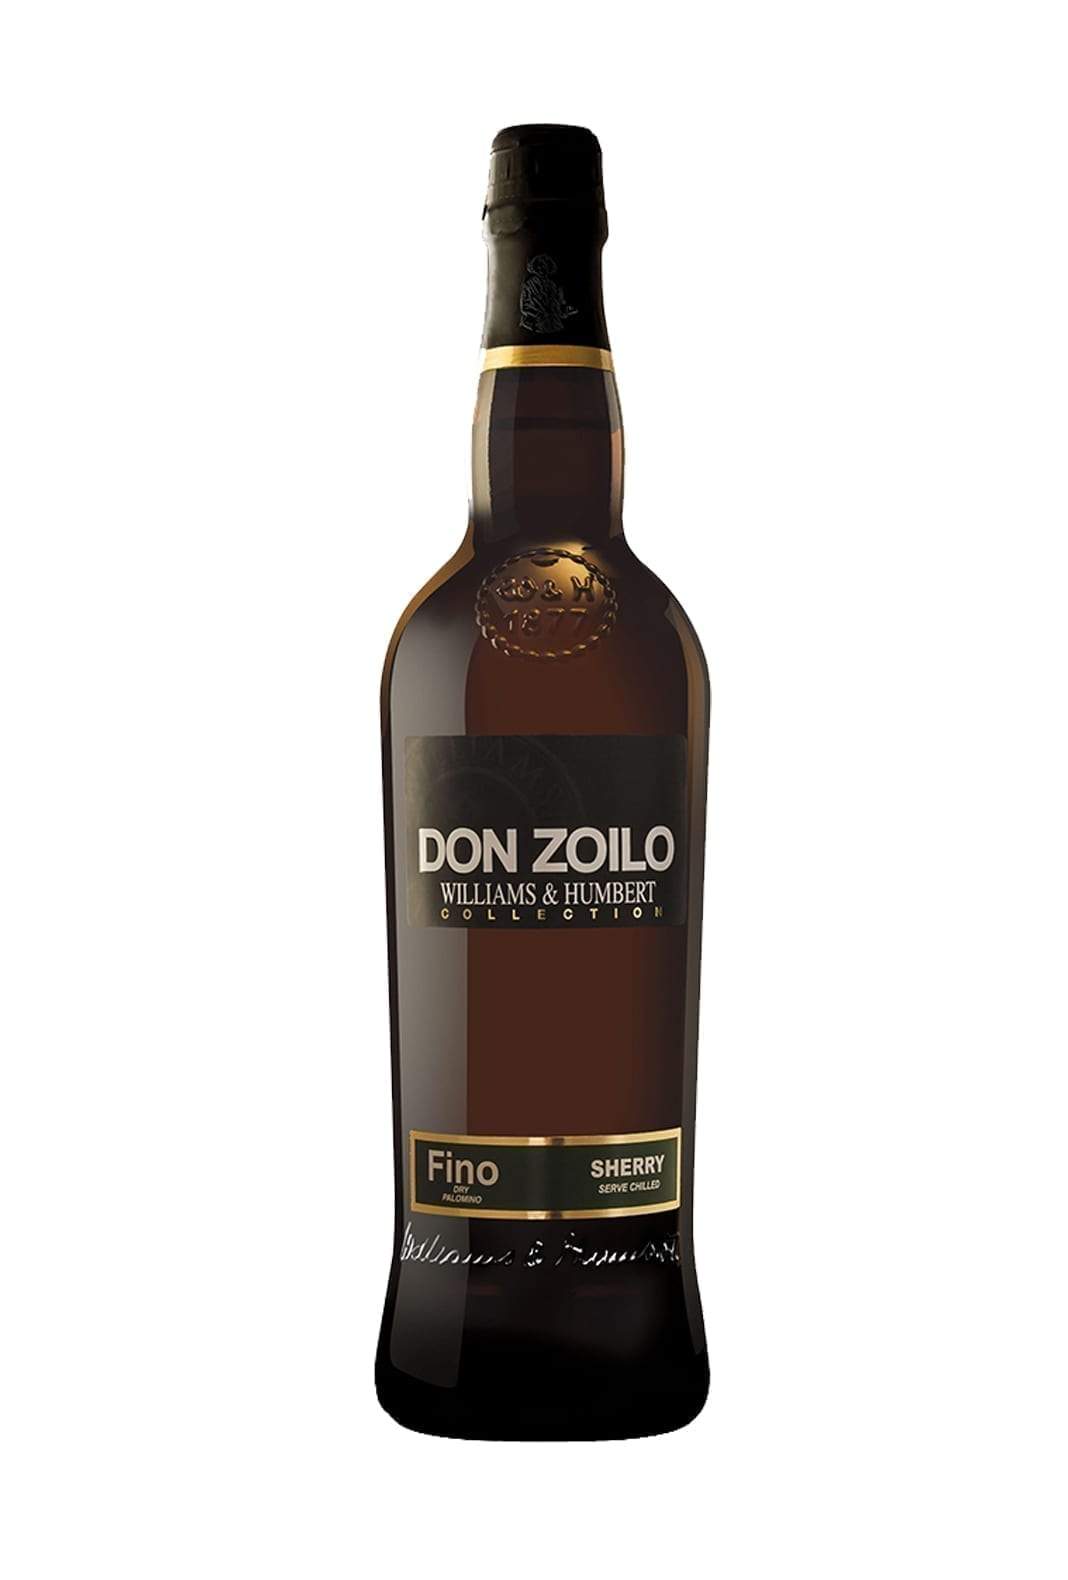 Don Zoilo Sherry Aperitif Fino 15% 750ml | Liquor & Spirits | Shop online at Spirits of France